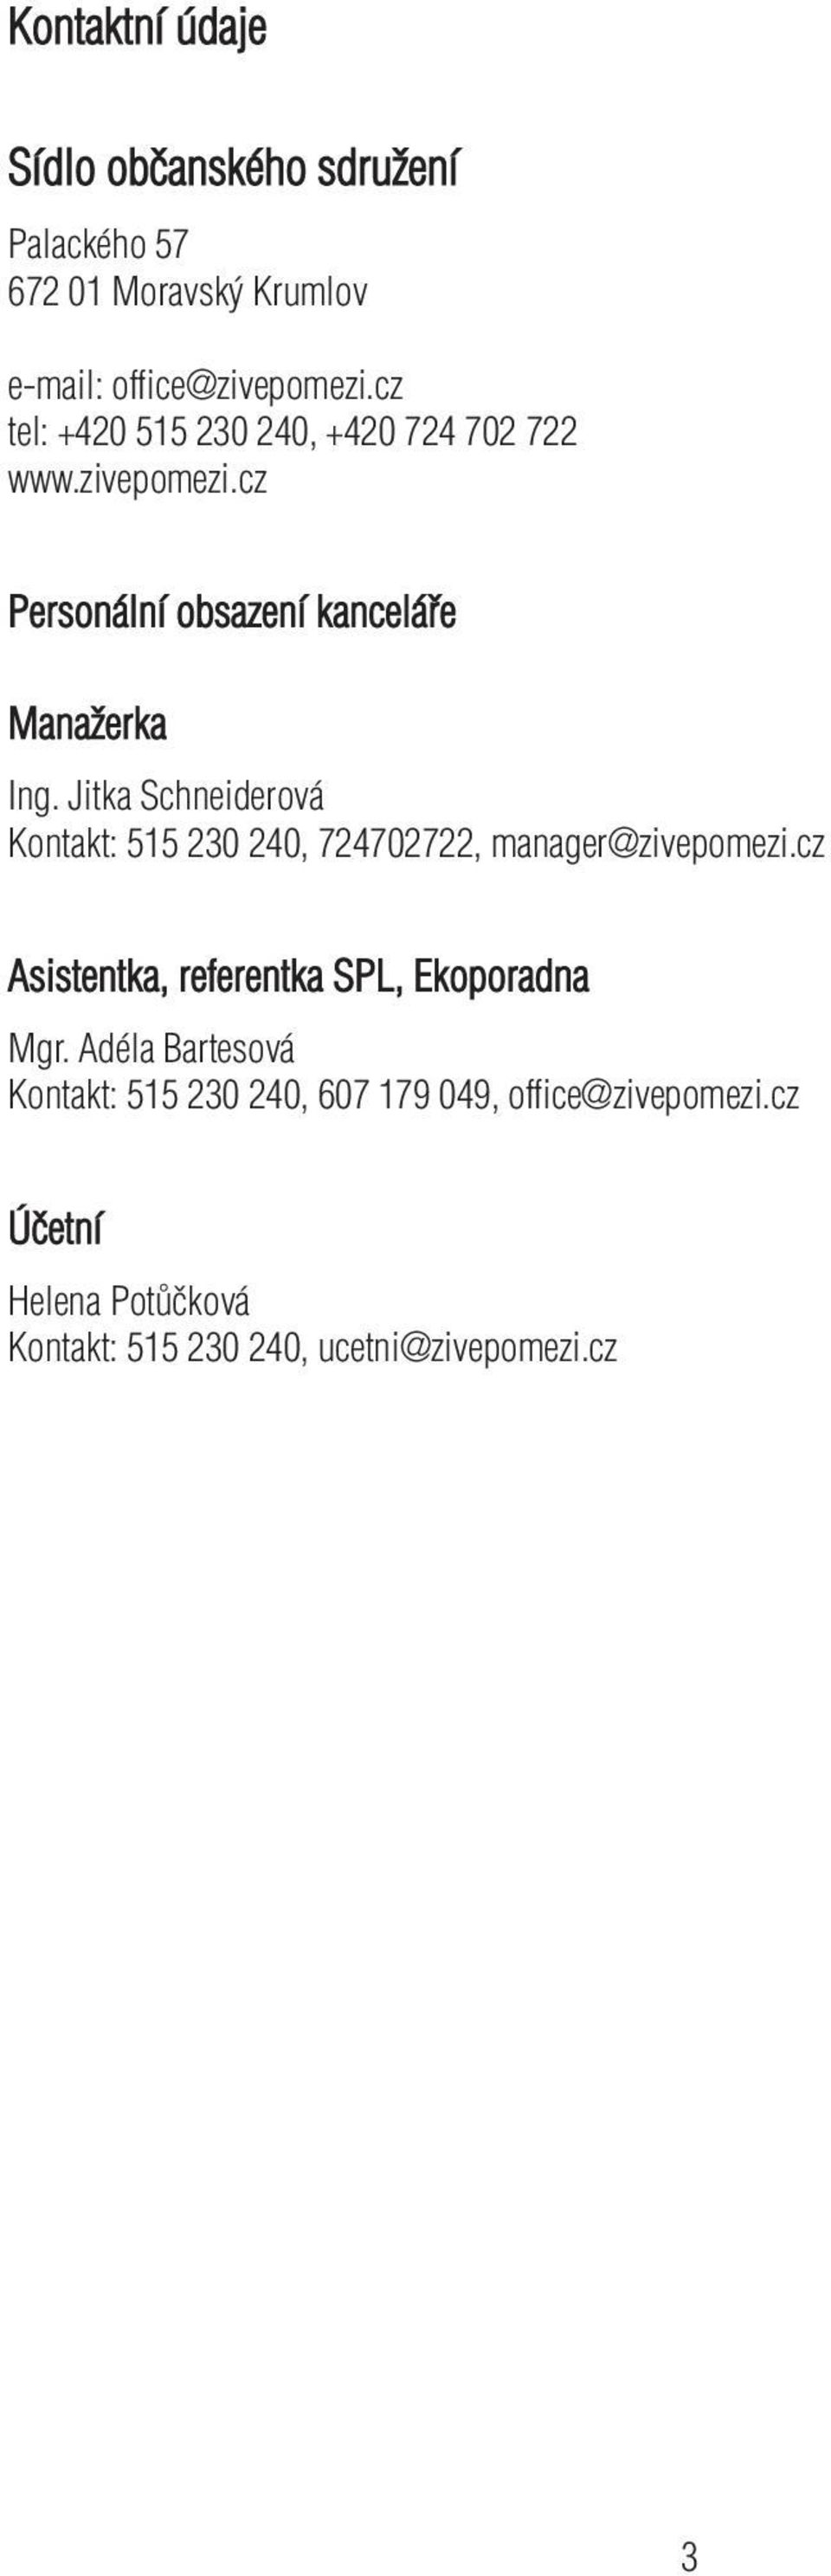 Jitka Schneiderová Kontakt: 515 230 240, 724702722, manager@zivepomezi.cz Asistentka, referentka SPL, Ekoporadna Mgr.